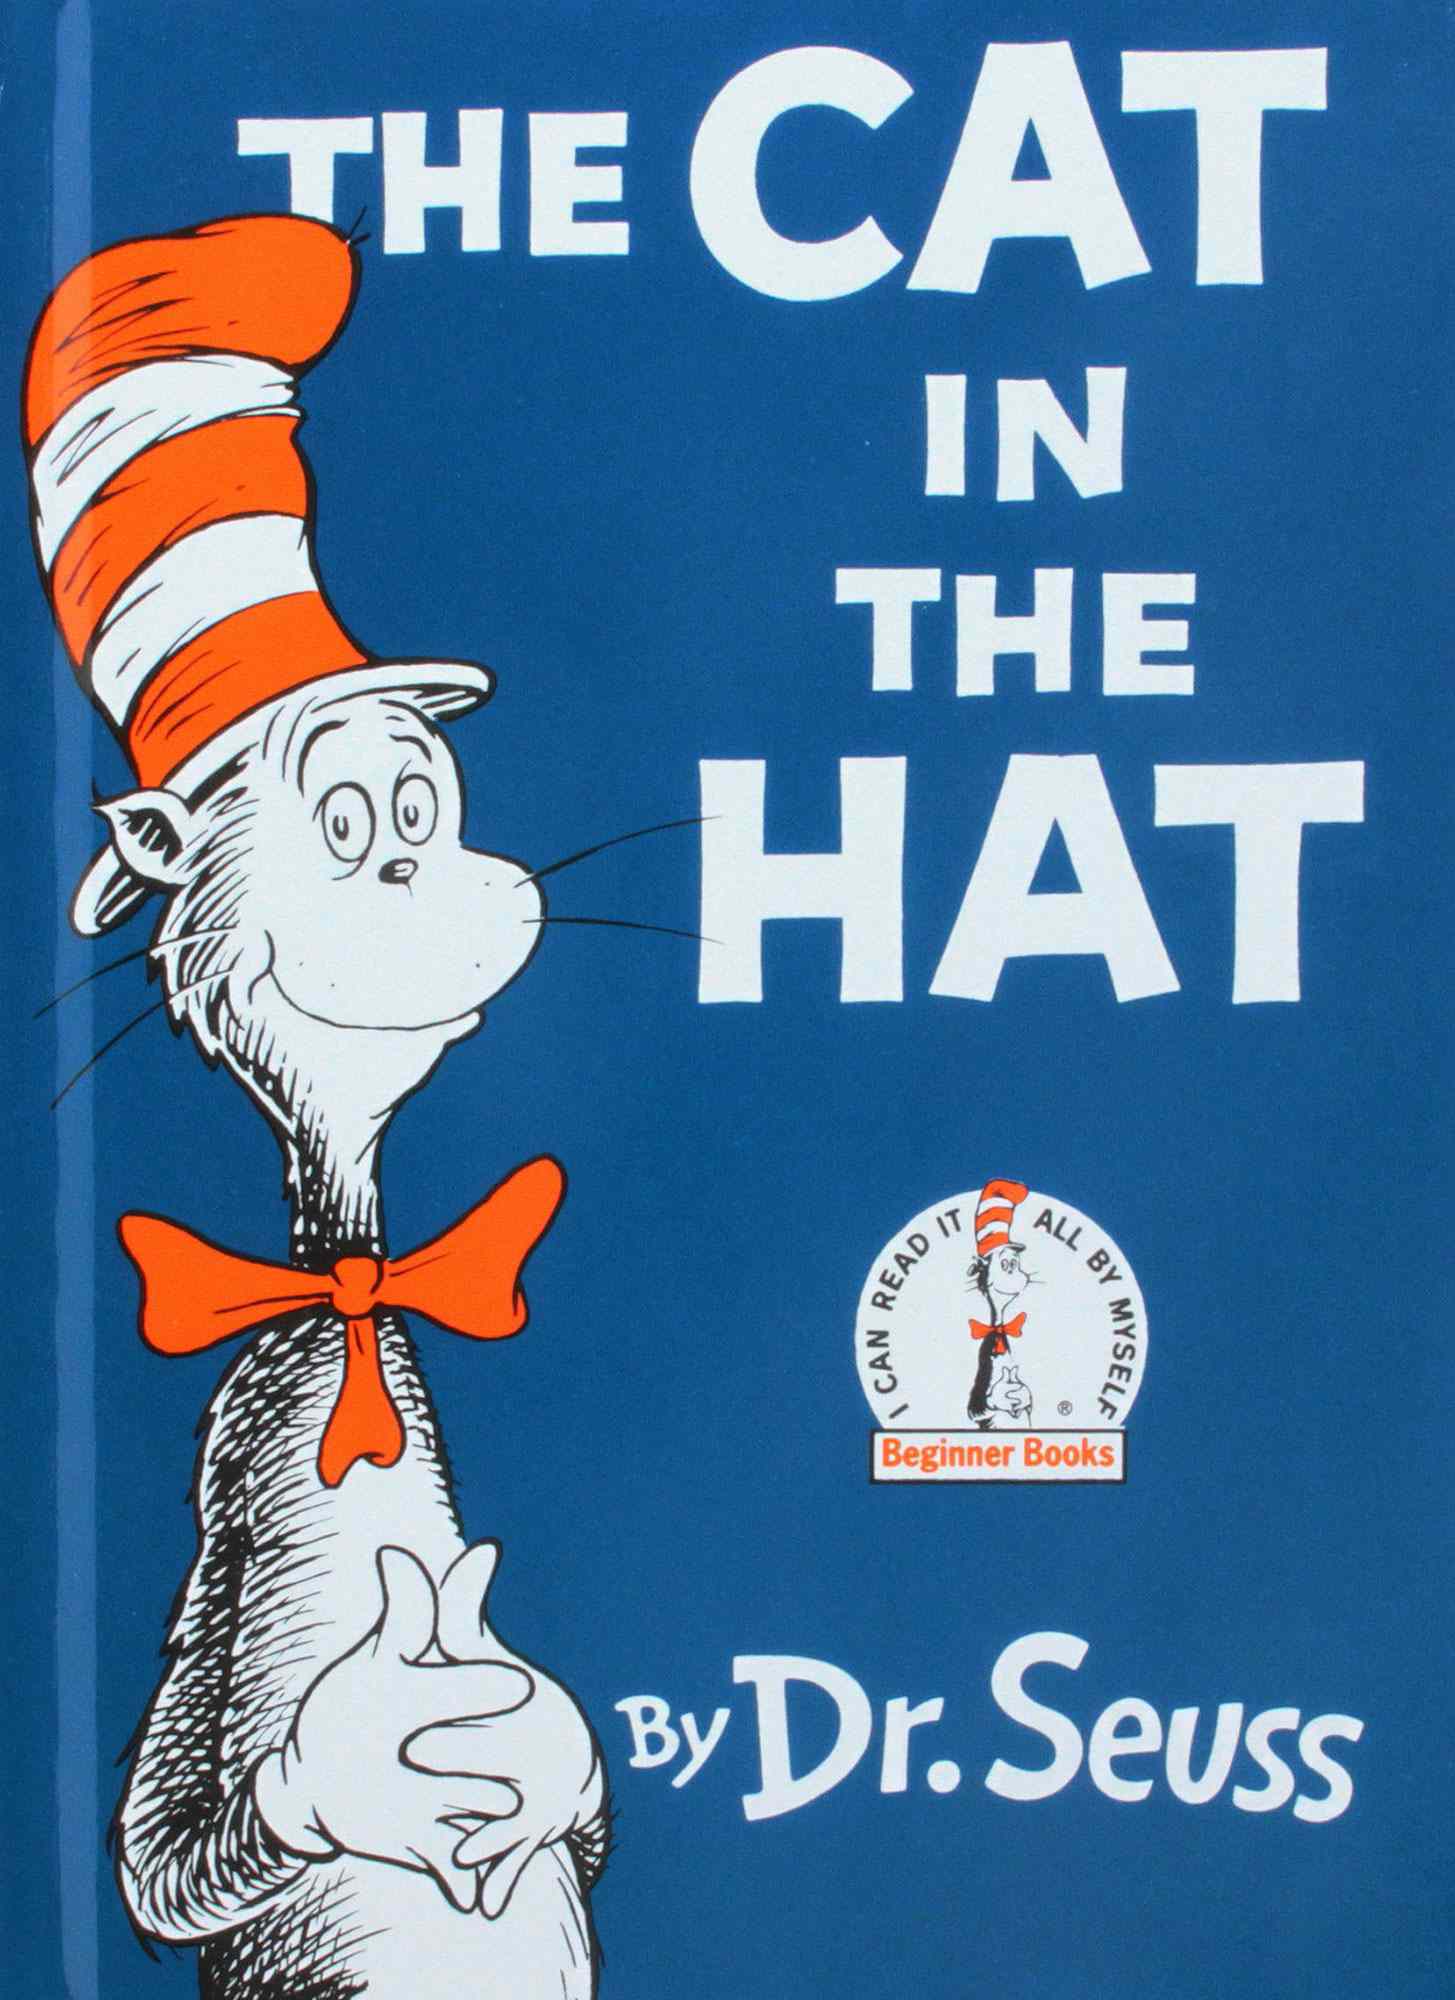 Dr. Seuss Books Deemed Racist in New Study  PEOPLE.com